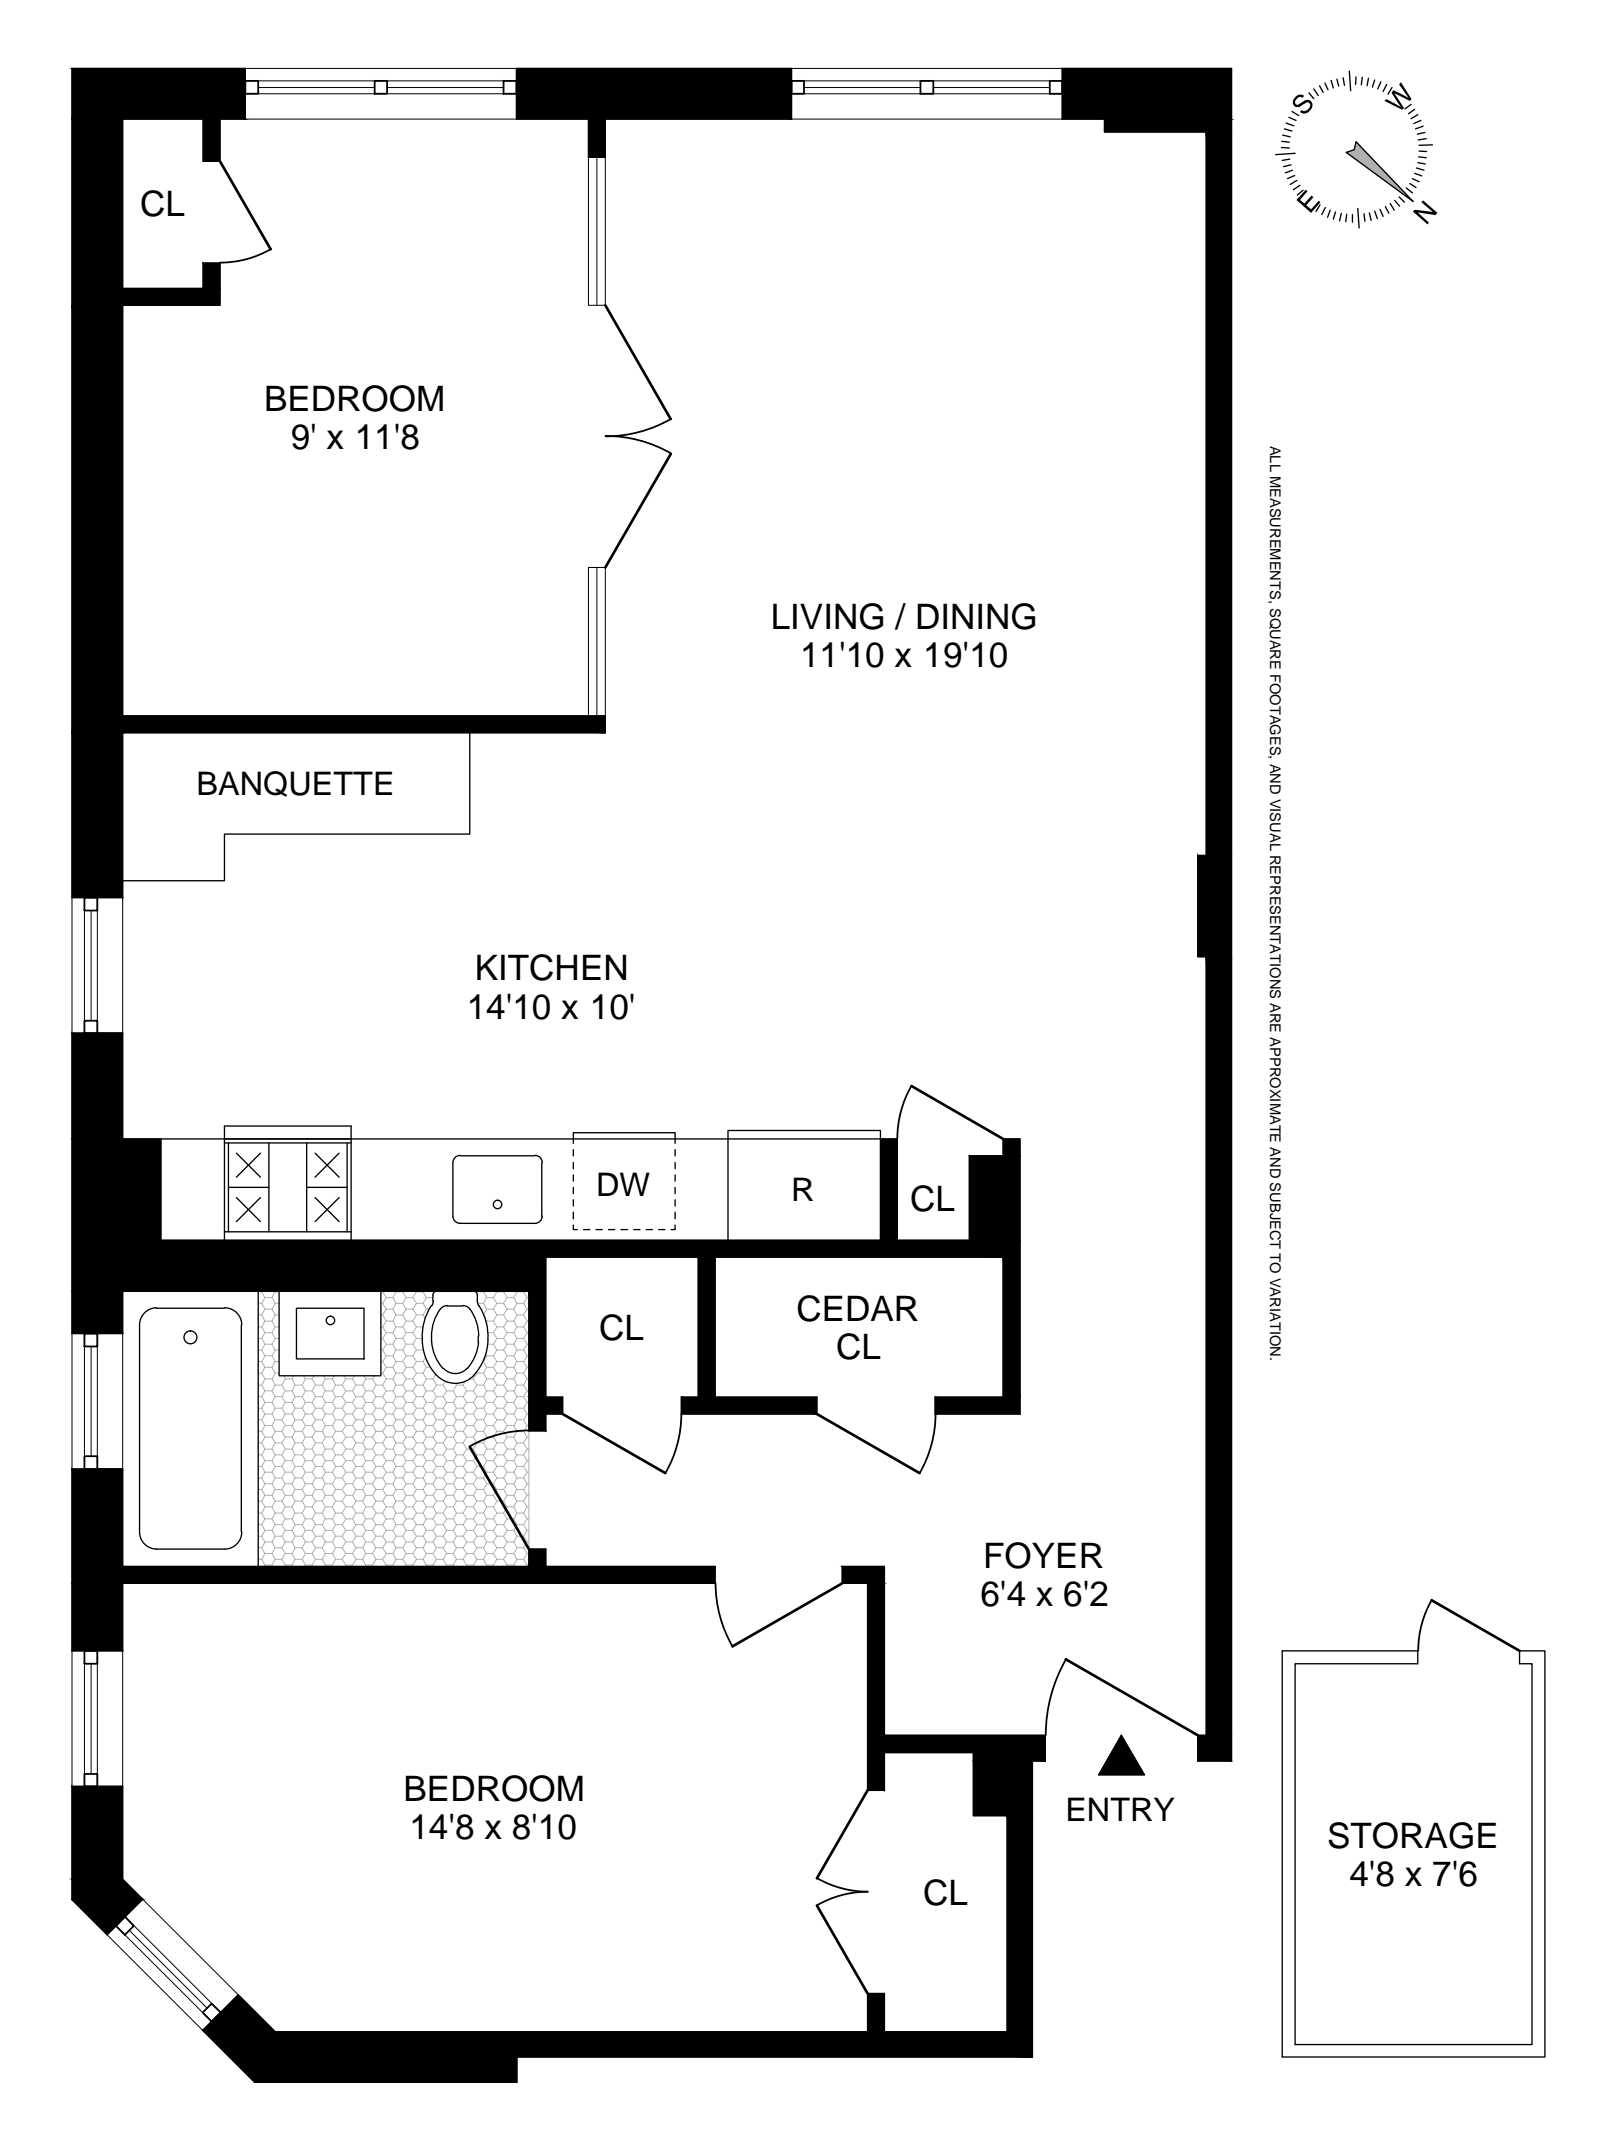 Floorplan for 549 41st Street, 2A